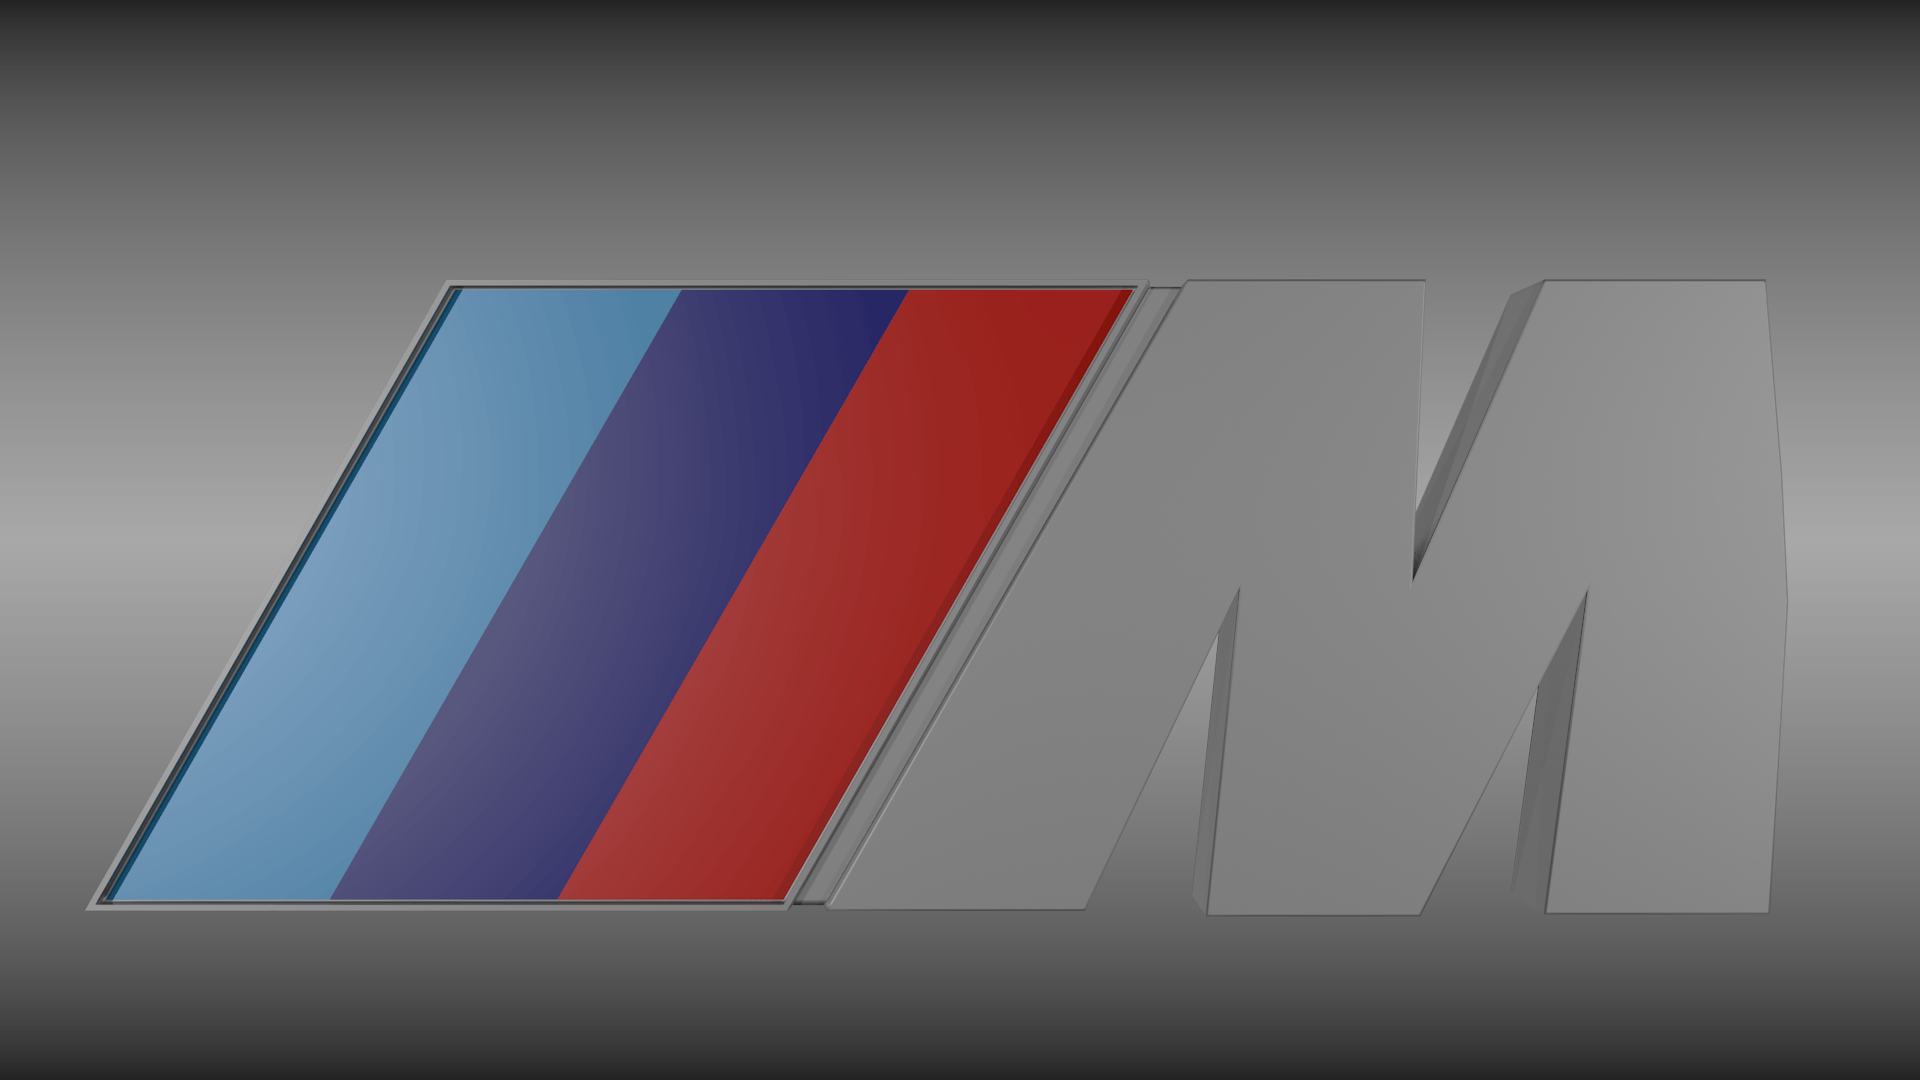 BMW M Logo Wallpapers